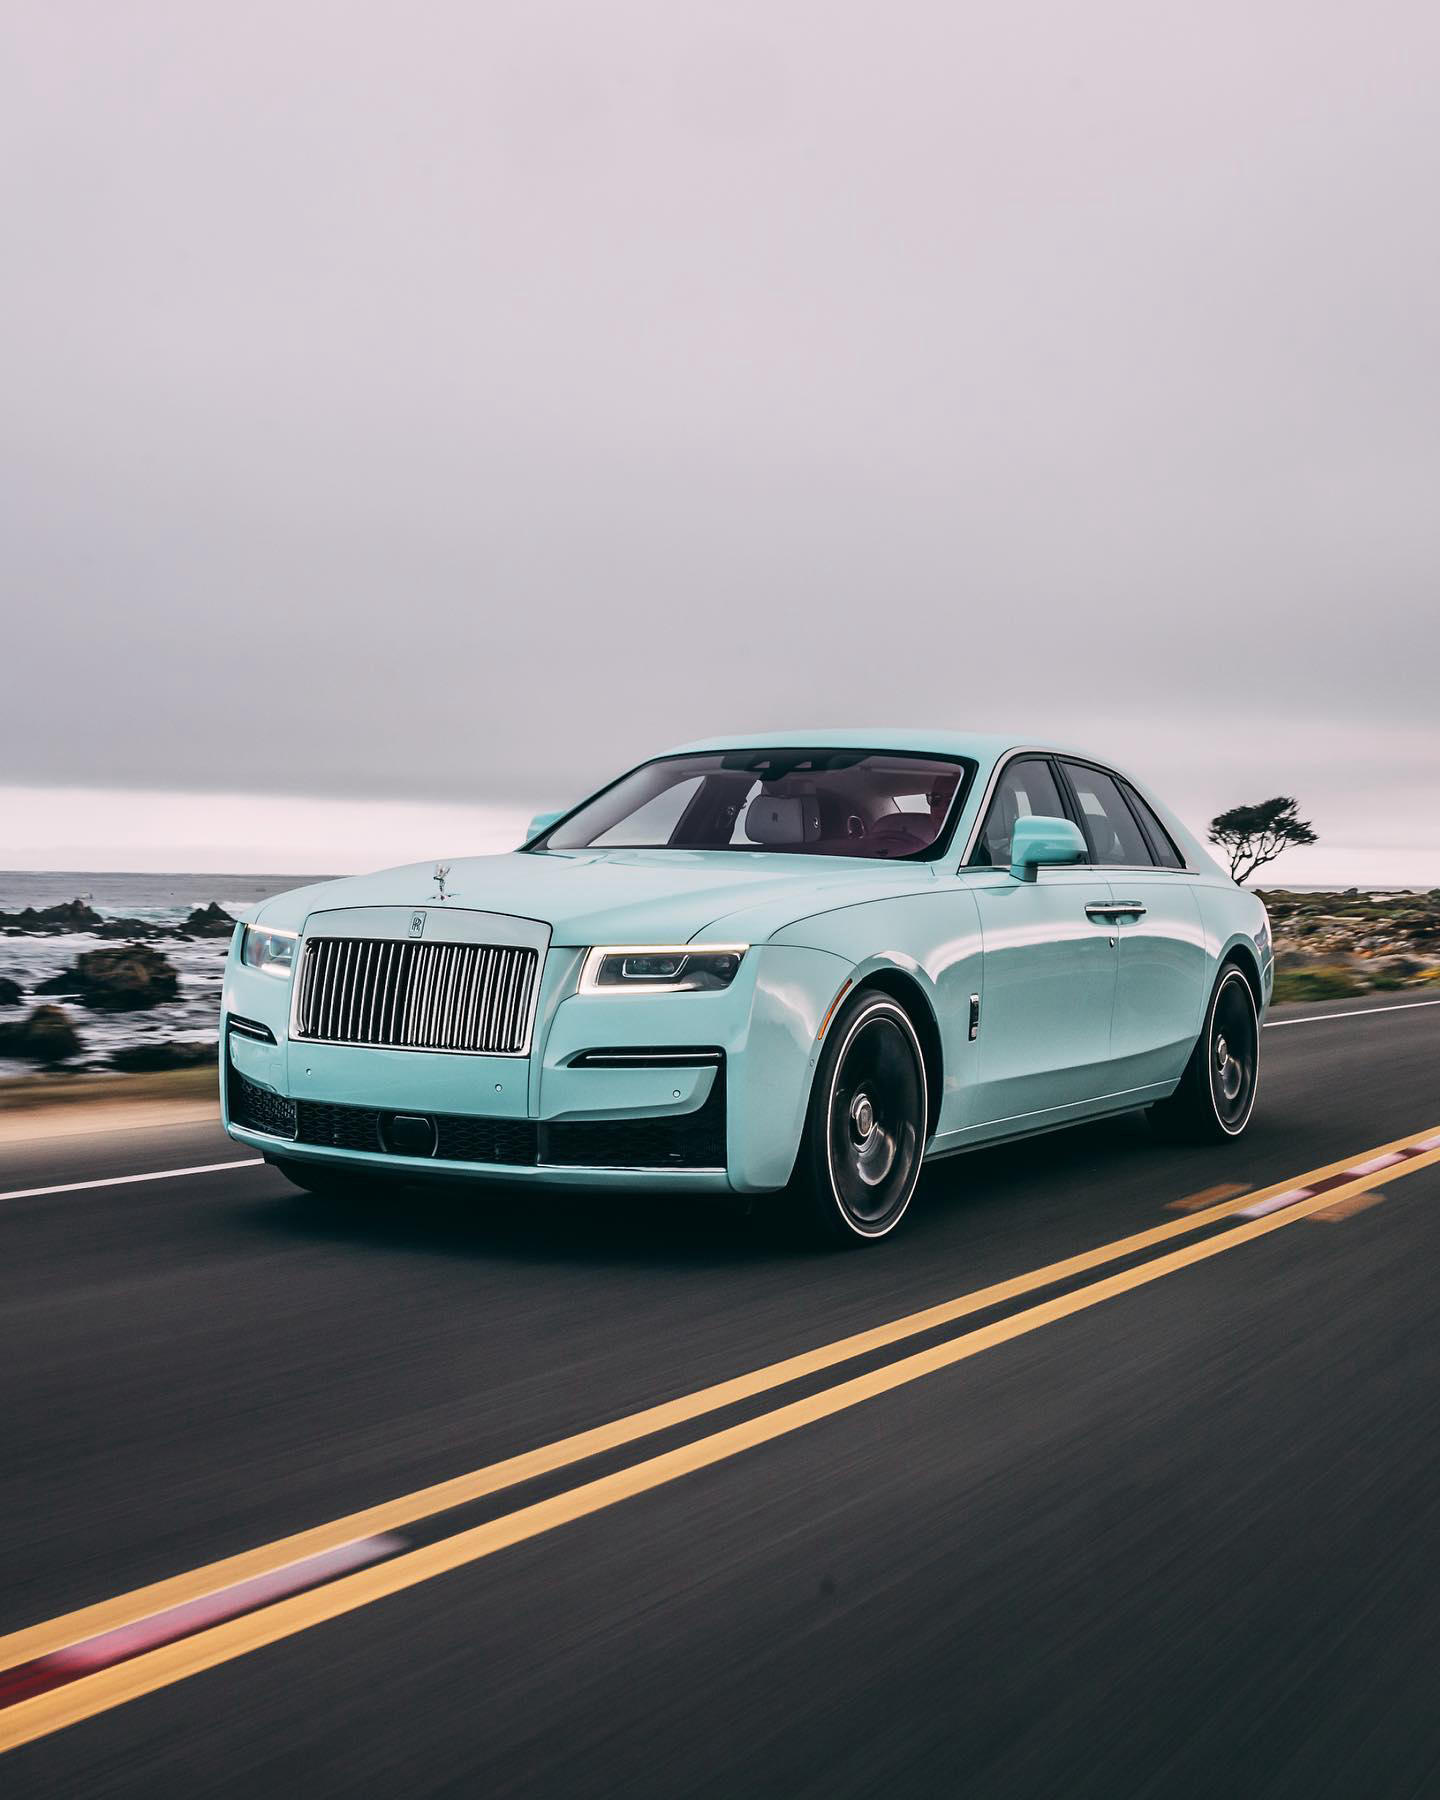 Rolls-Royce Motor Cars - Revealed during Monterey Car Week, this #Bespoke #RollsRoyceGhost from the